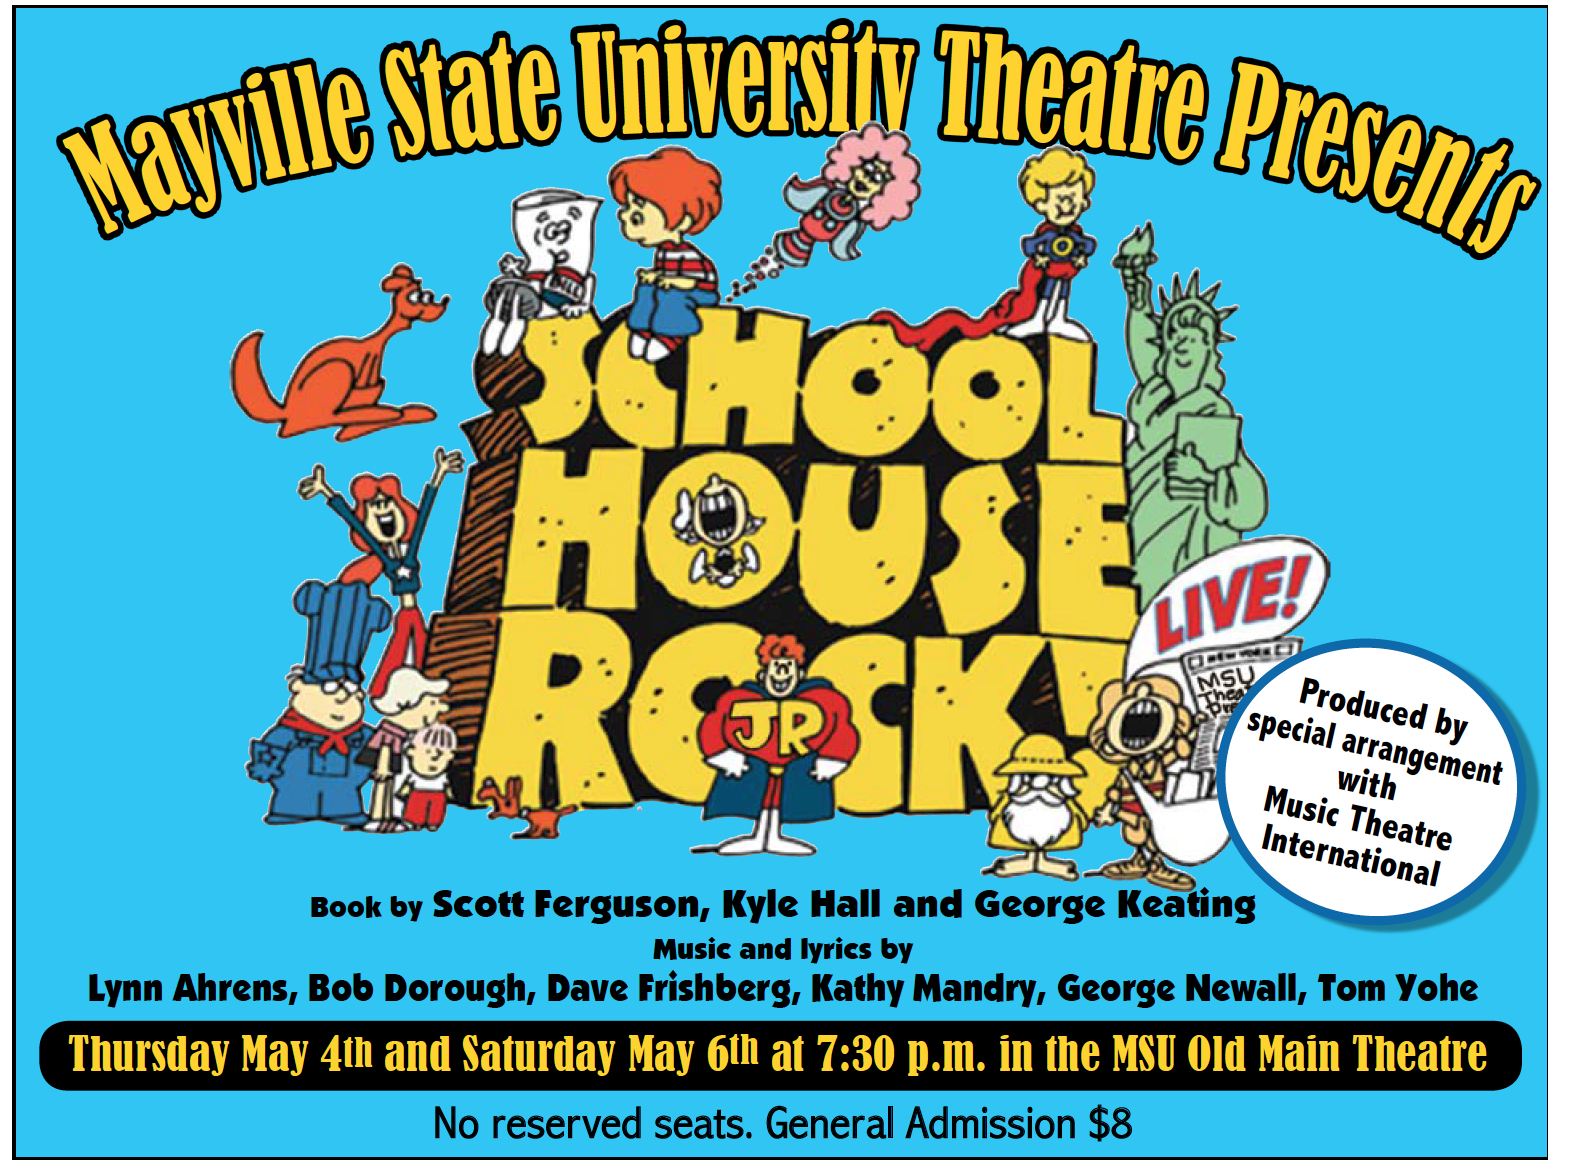 MSU Theatre Presents School House Rock! @ Mayville State University Theatre